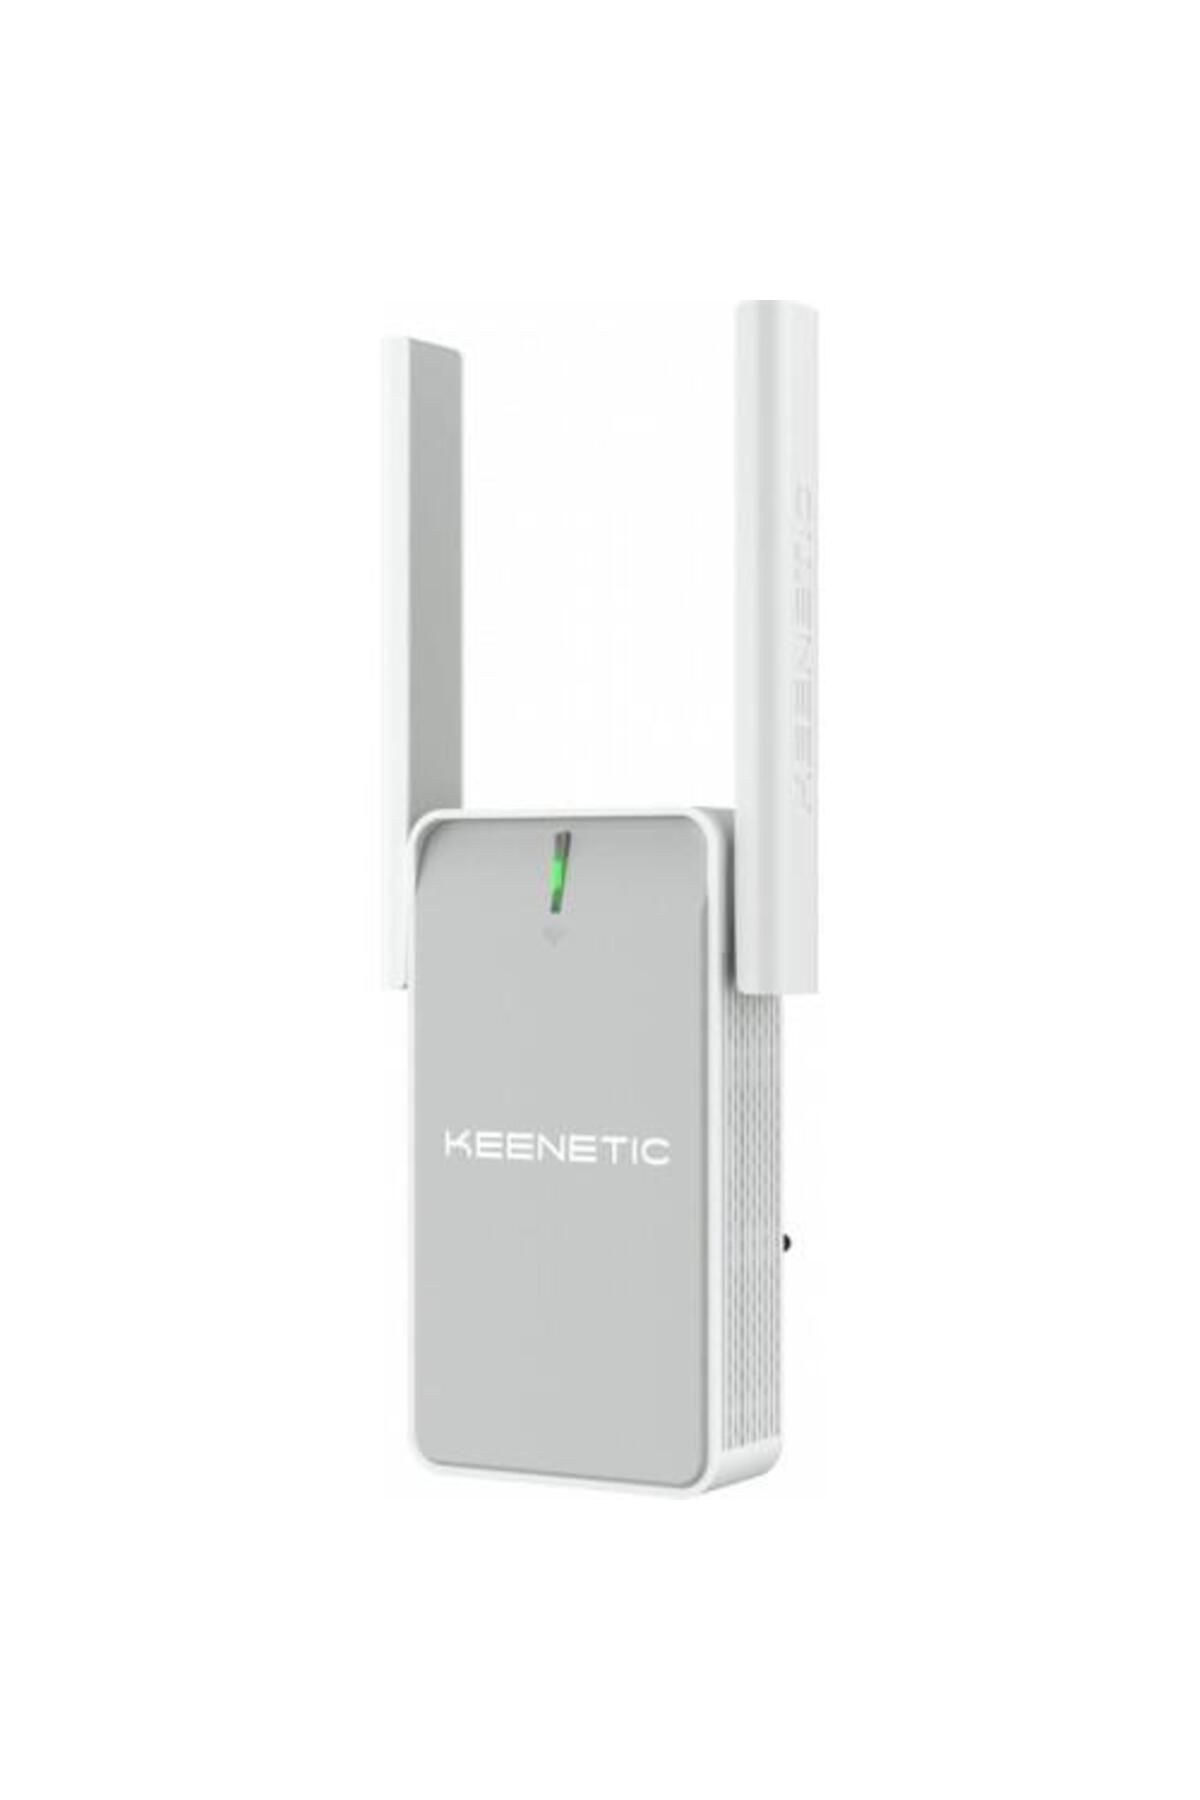 Keenetic Buddy 4 Kablosuz Menzil Genişletici, Wi-fi Mesh, Repeater, Range Extender, Access Point